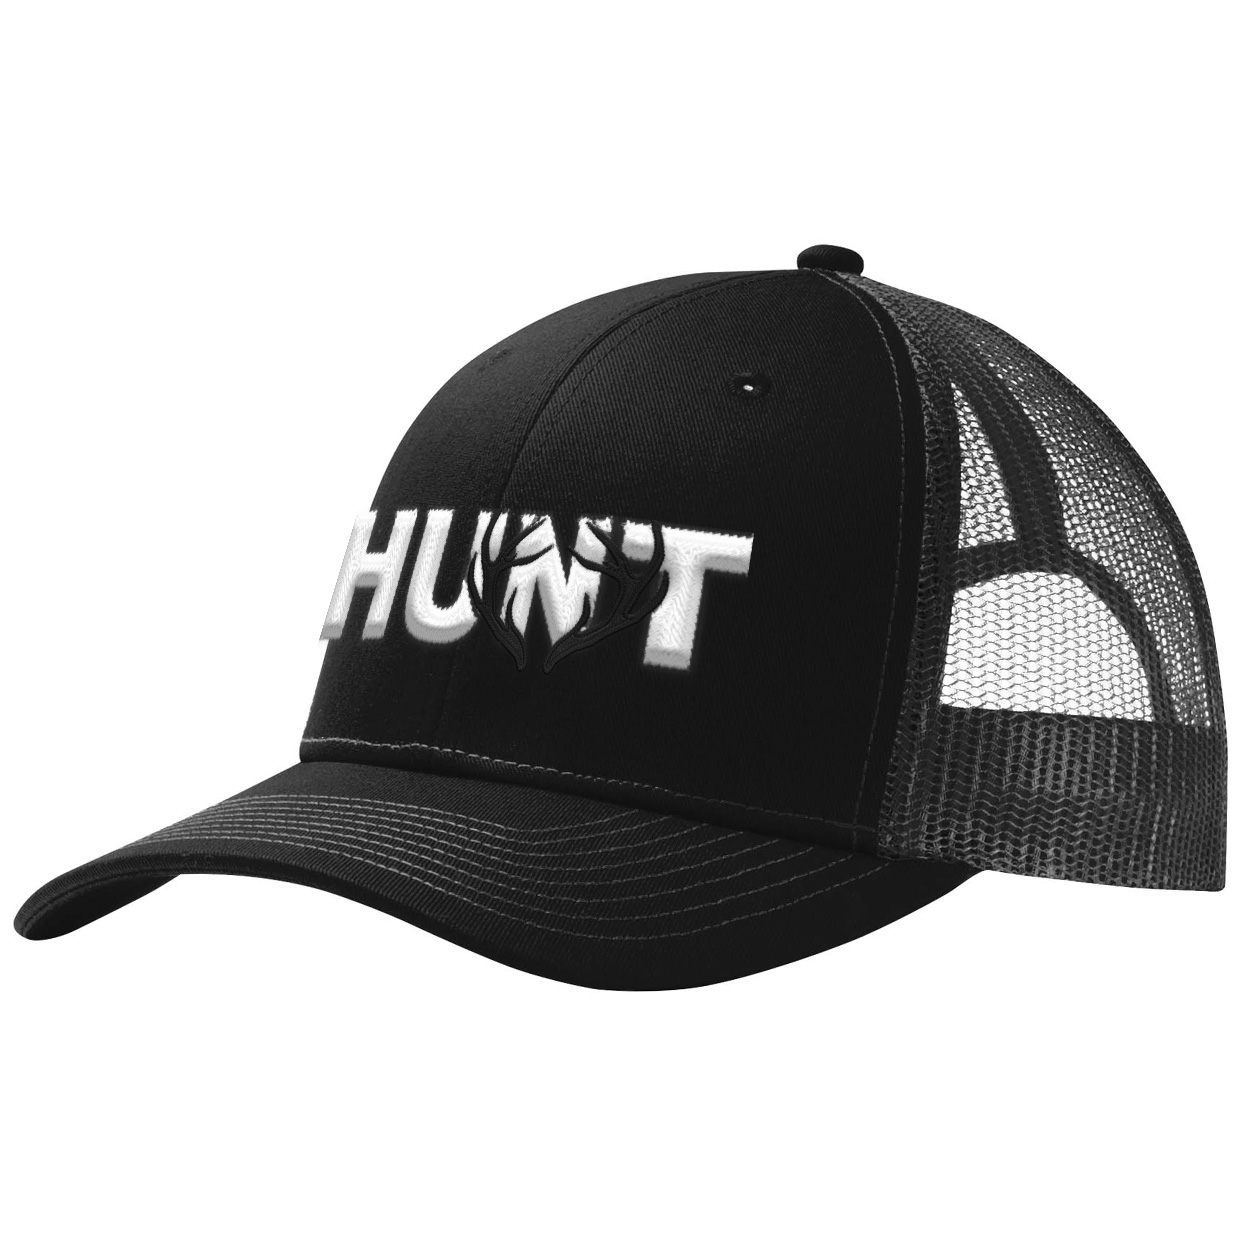 Hunt Rack Logo Classic Pro 3D Puff Embroidered Snapback Trucker Hat Black/Gray